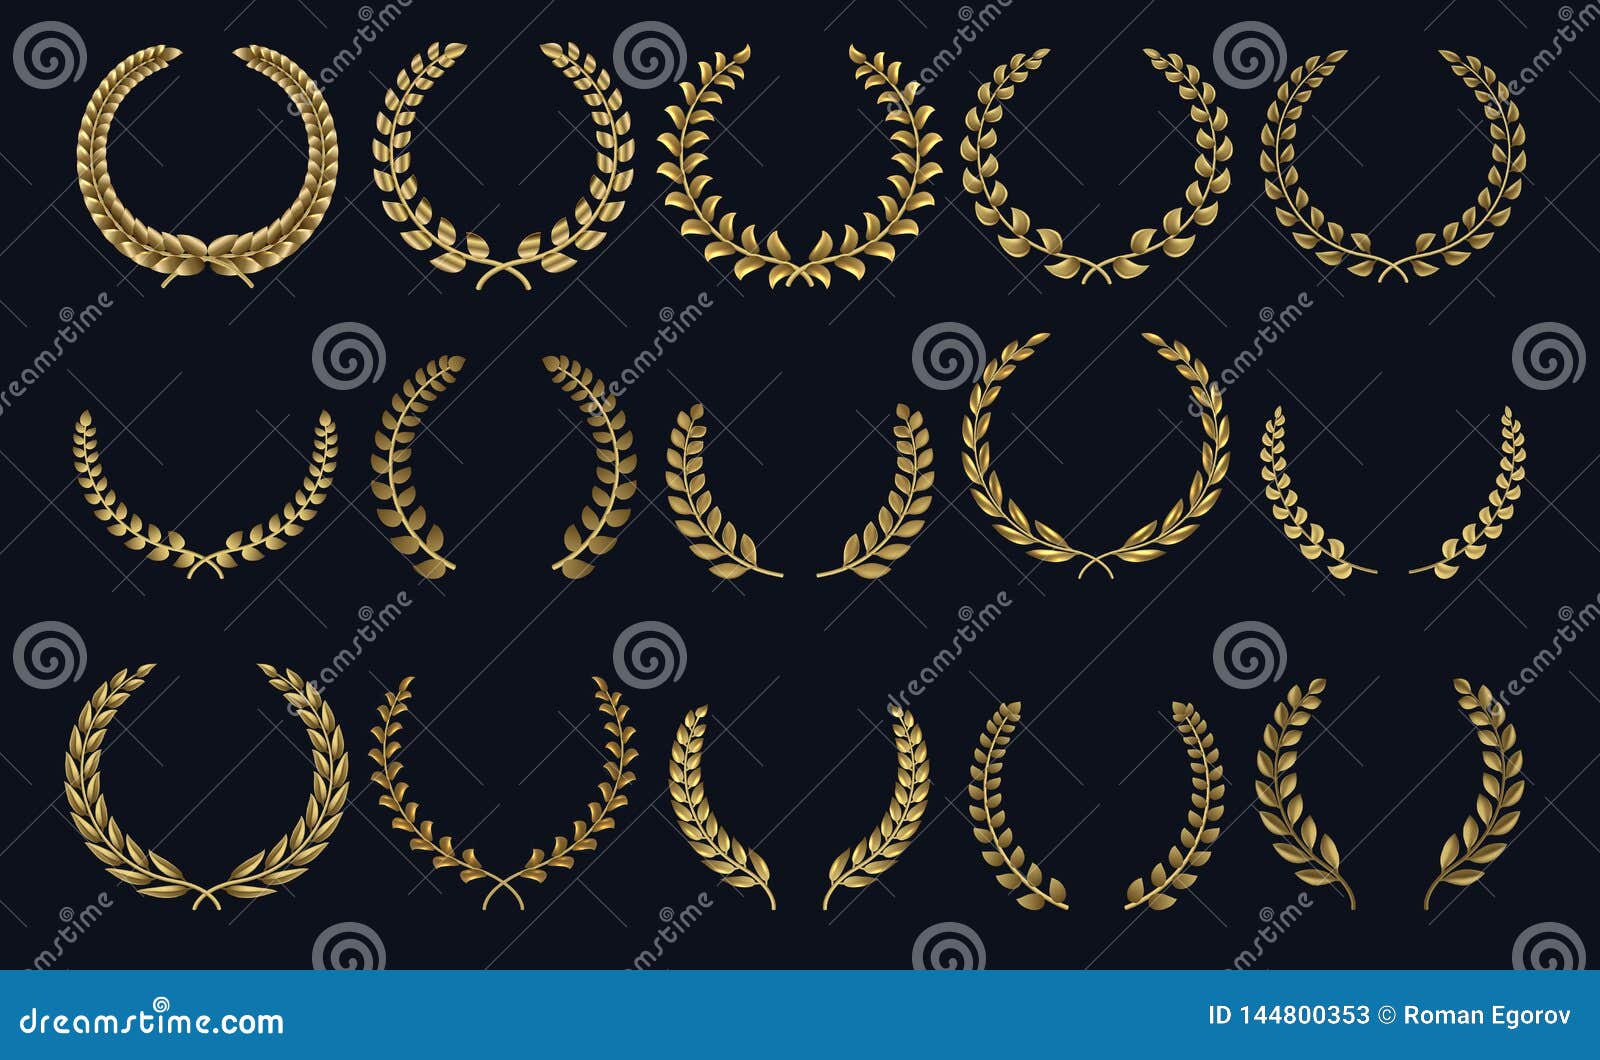 golden laurel wreath. realistic crown, leaf s winner prize, foliate crest 3d emblems.  laurel silhouettes and